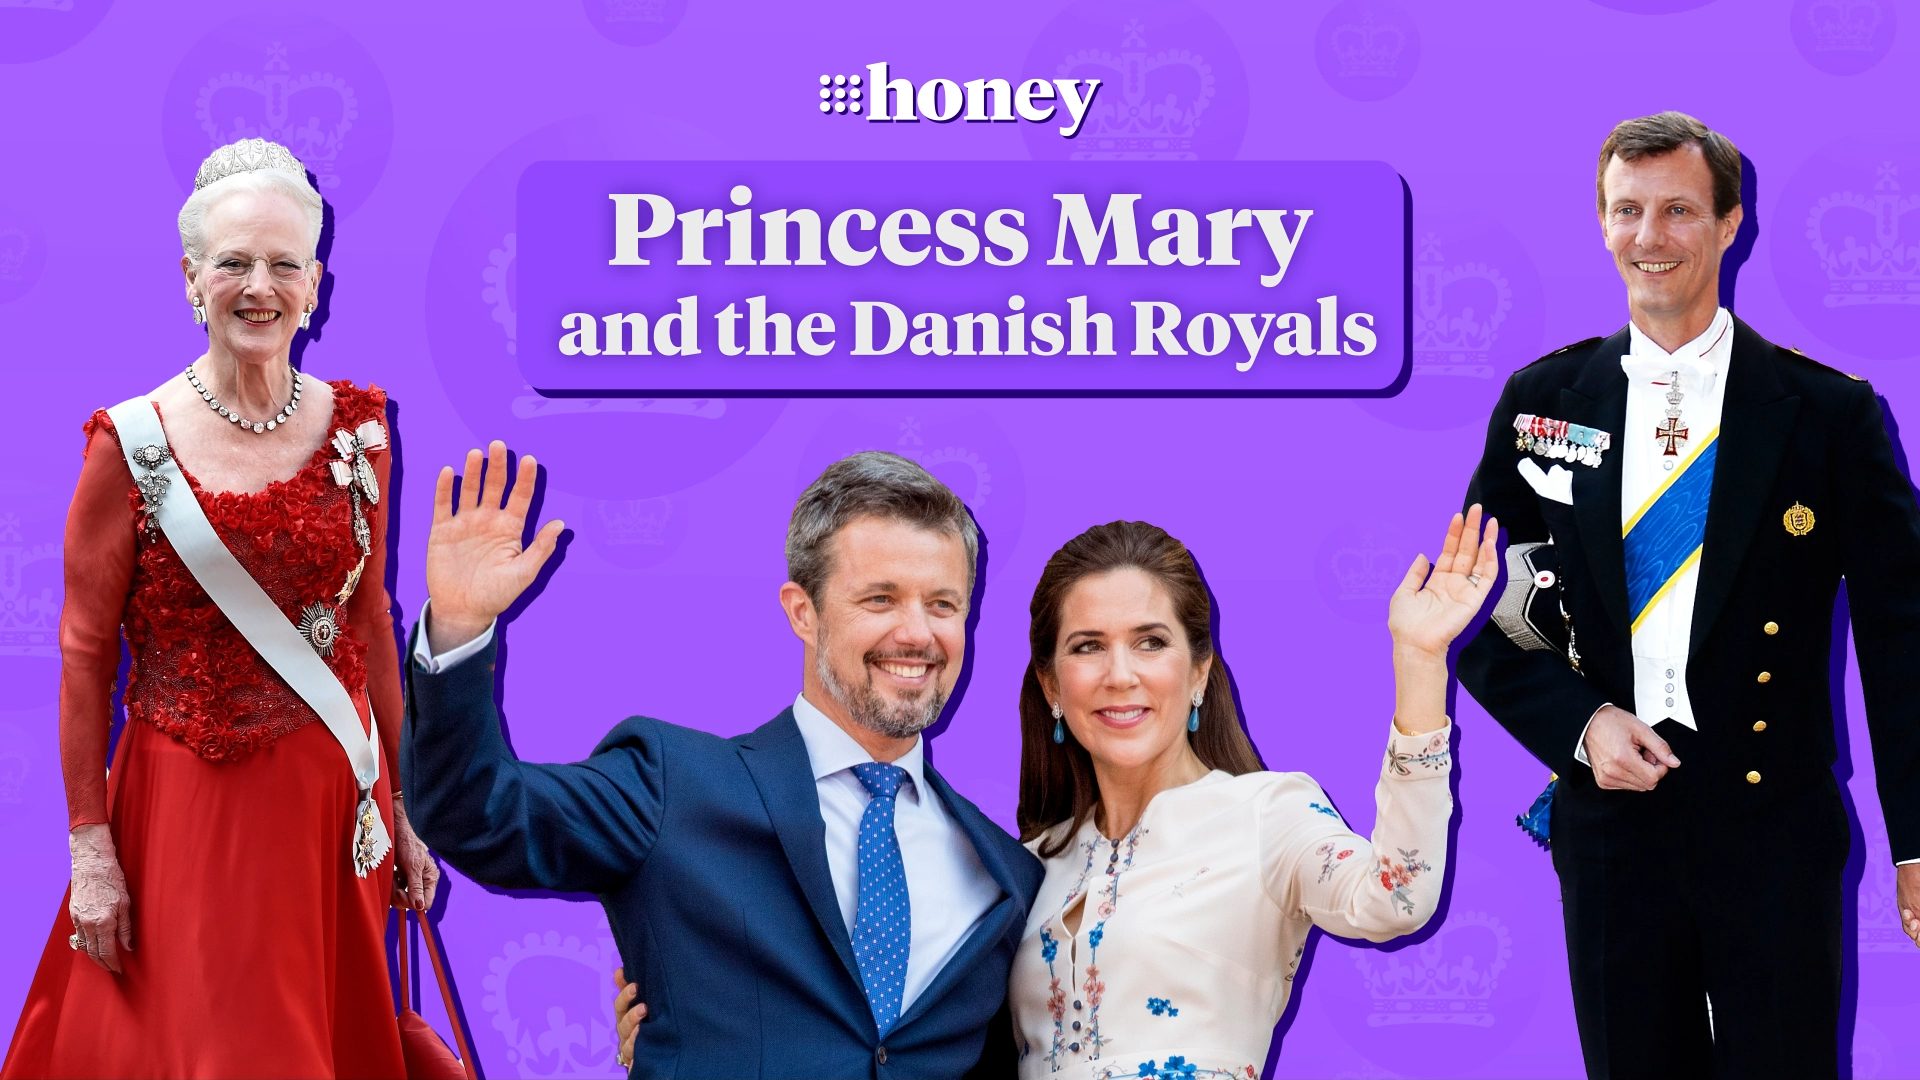 Princess Mary and the Danish royals - 9Honey